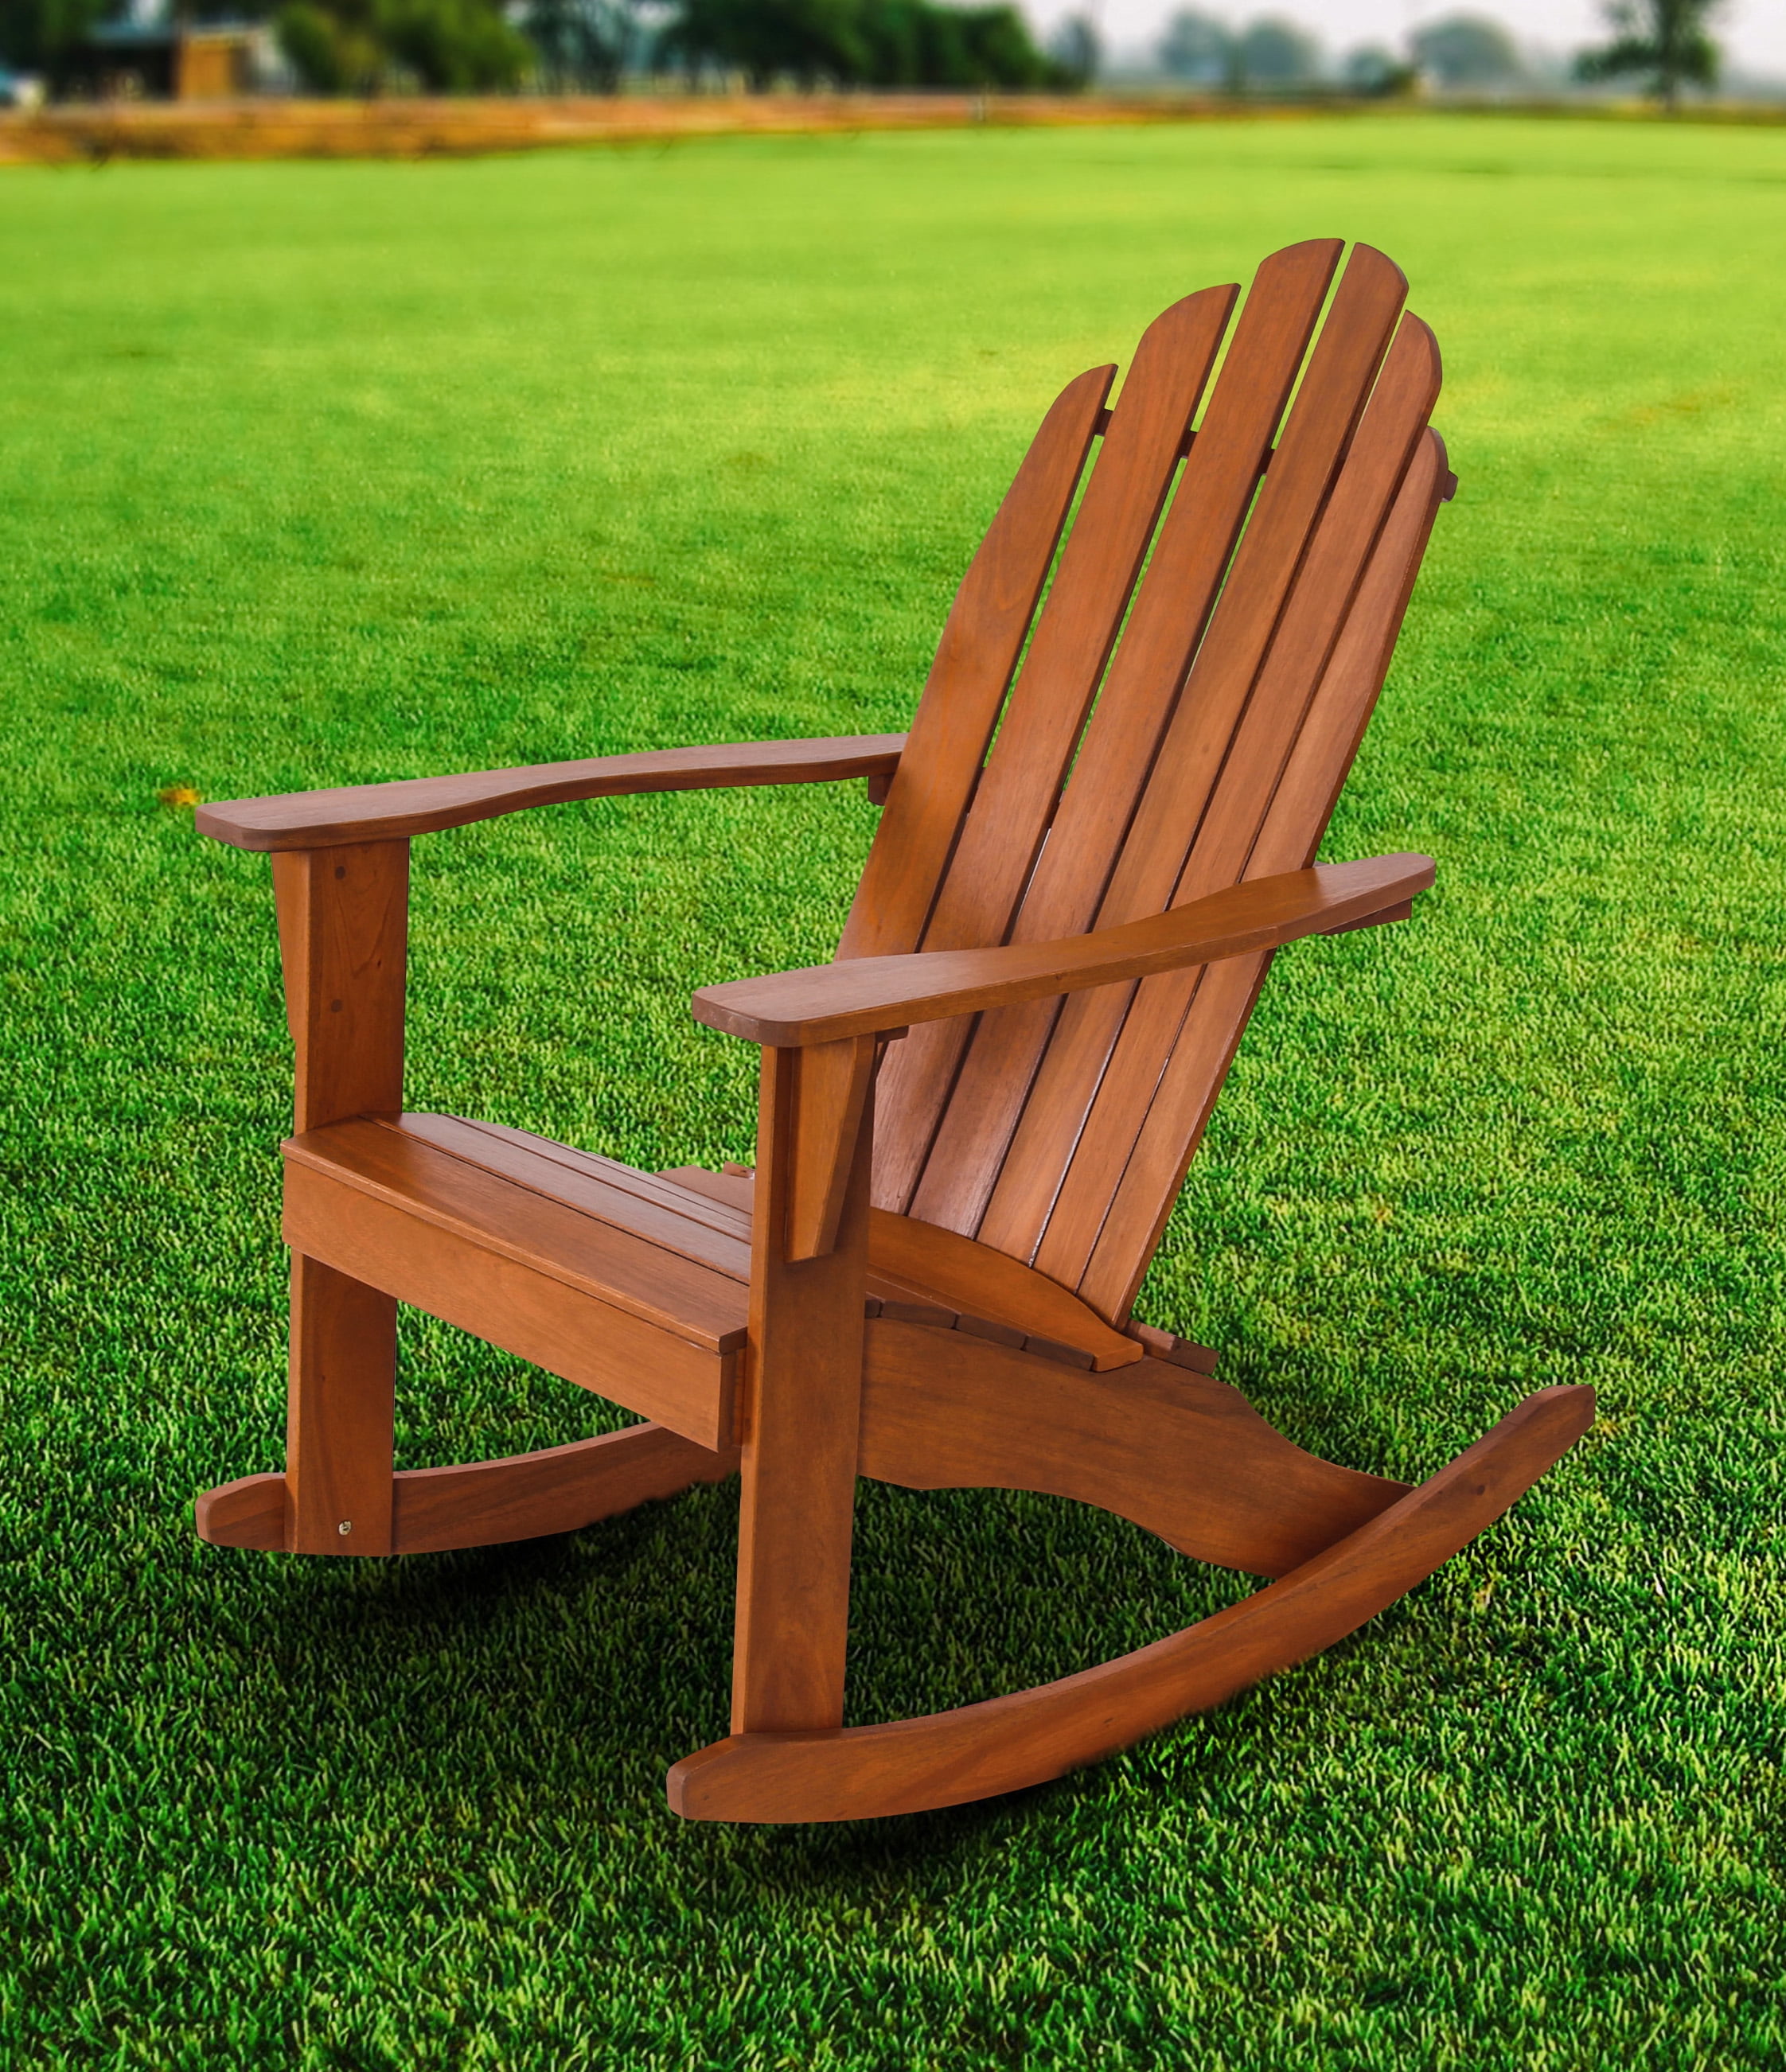 Mainstays Wood Adirondack Rocking Chair, Natural - Walmart.com